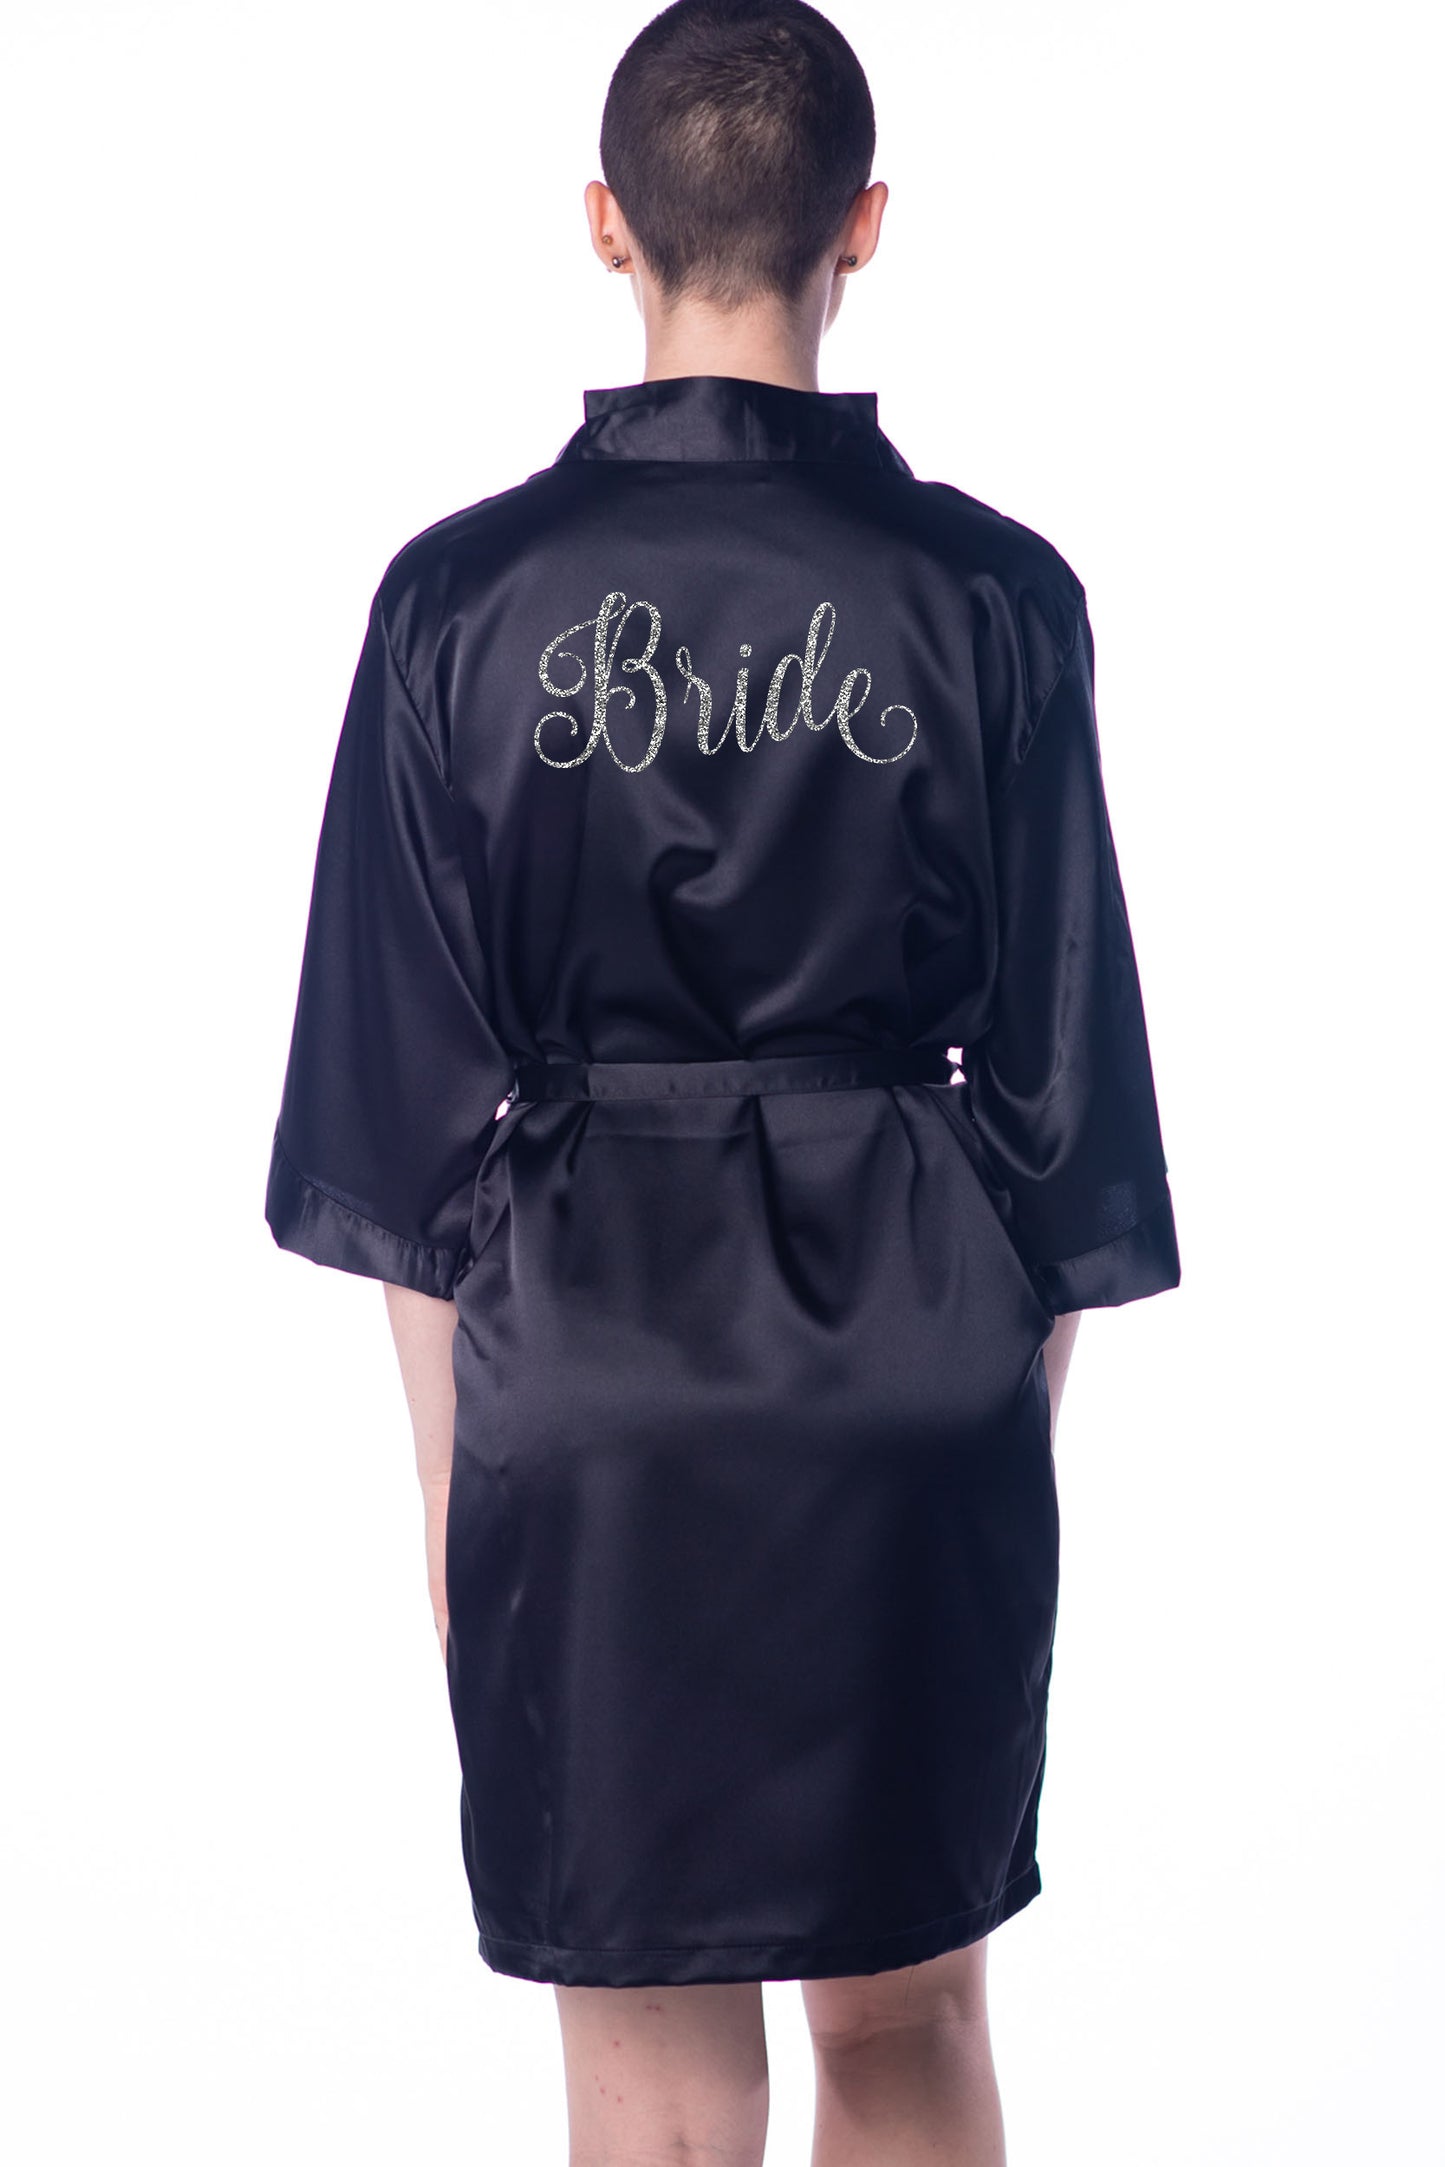 L/XL "Bride" Black Satin Robe - Nouradilla in Silver Glitter (Clearance Item)